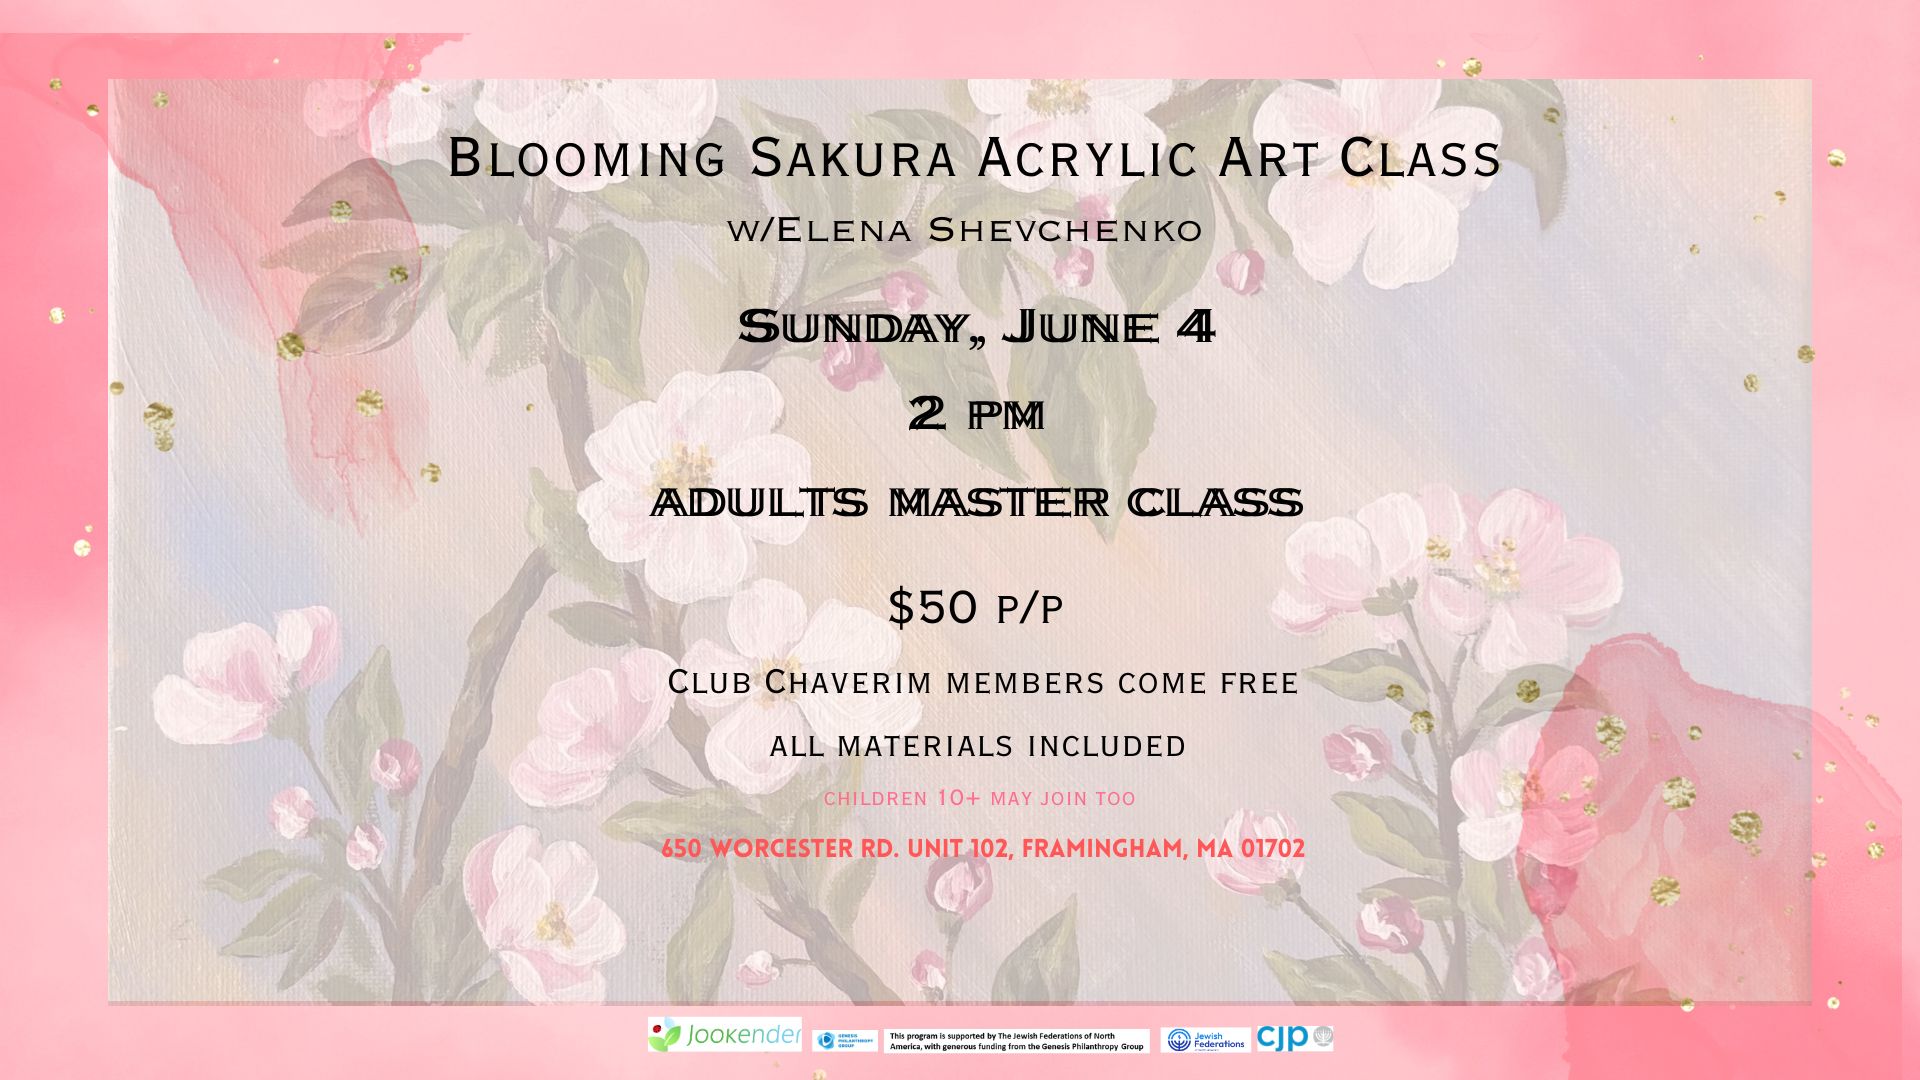 Blooming Sakura Acrylic Art Class